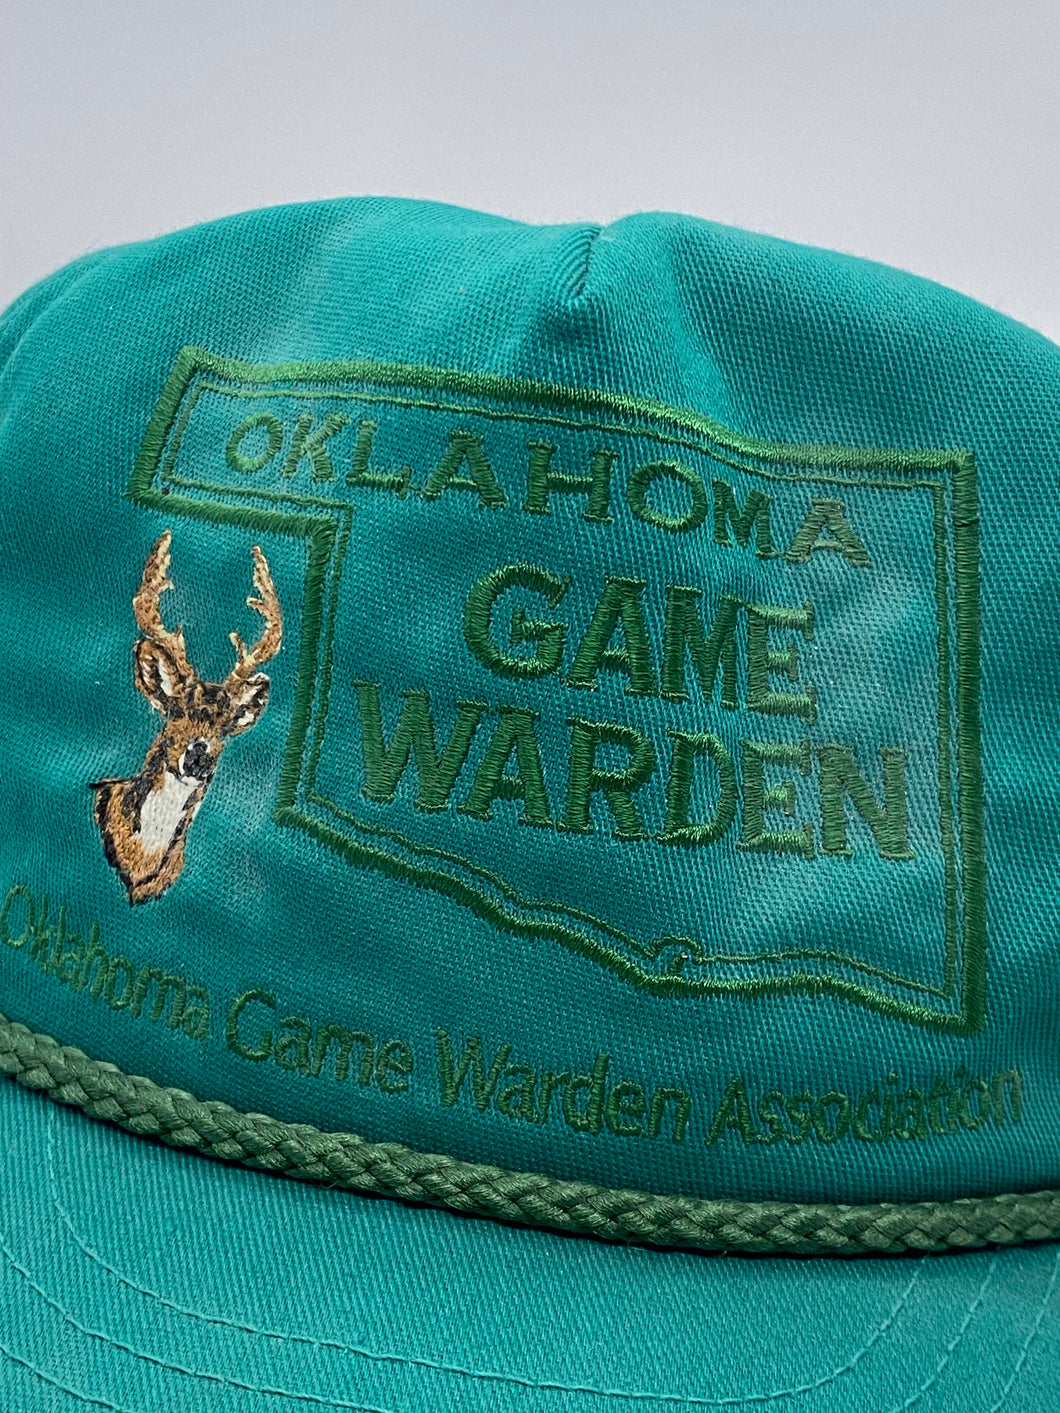 Oklahoma Game Warden Association Hat